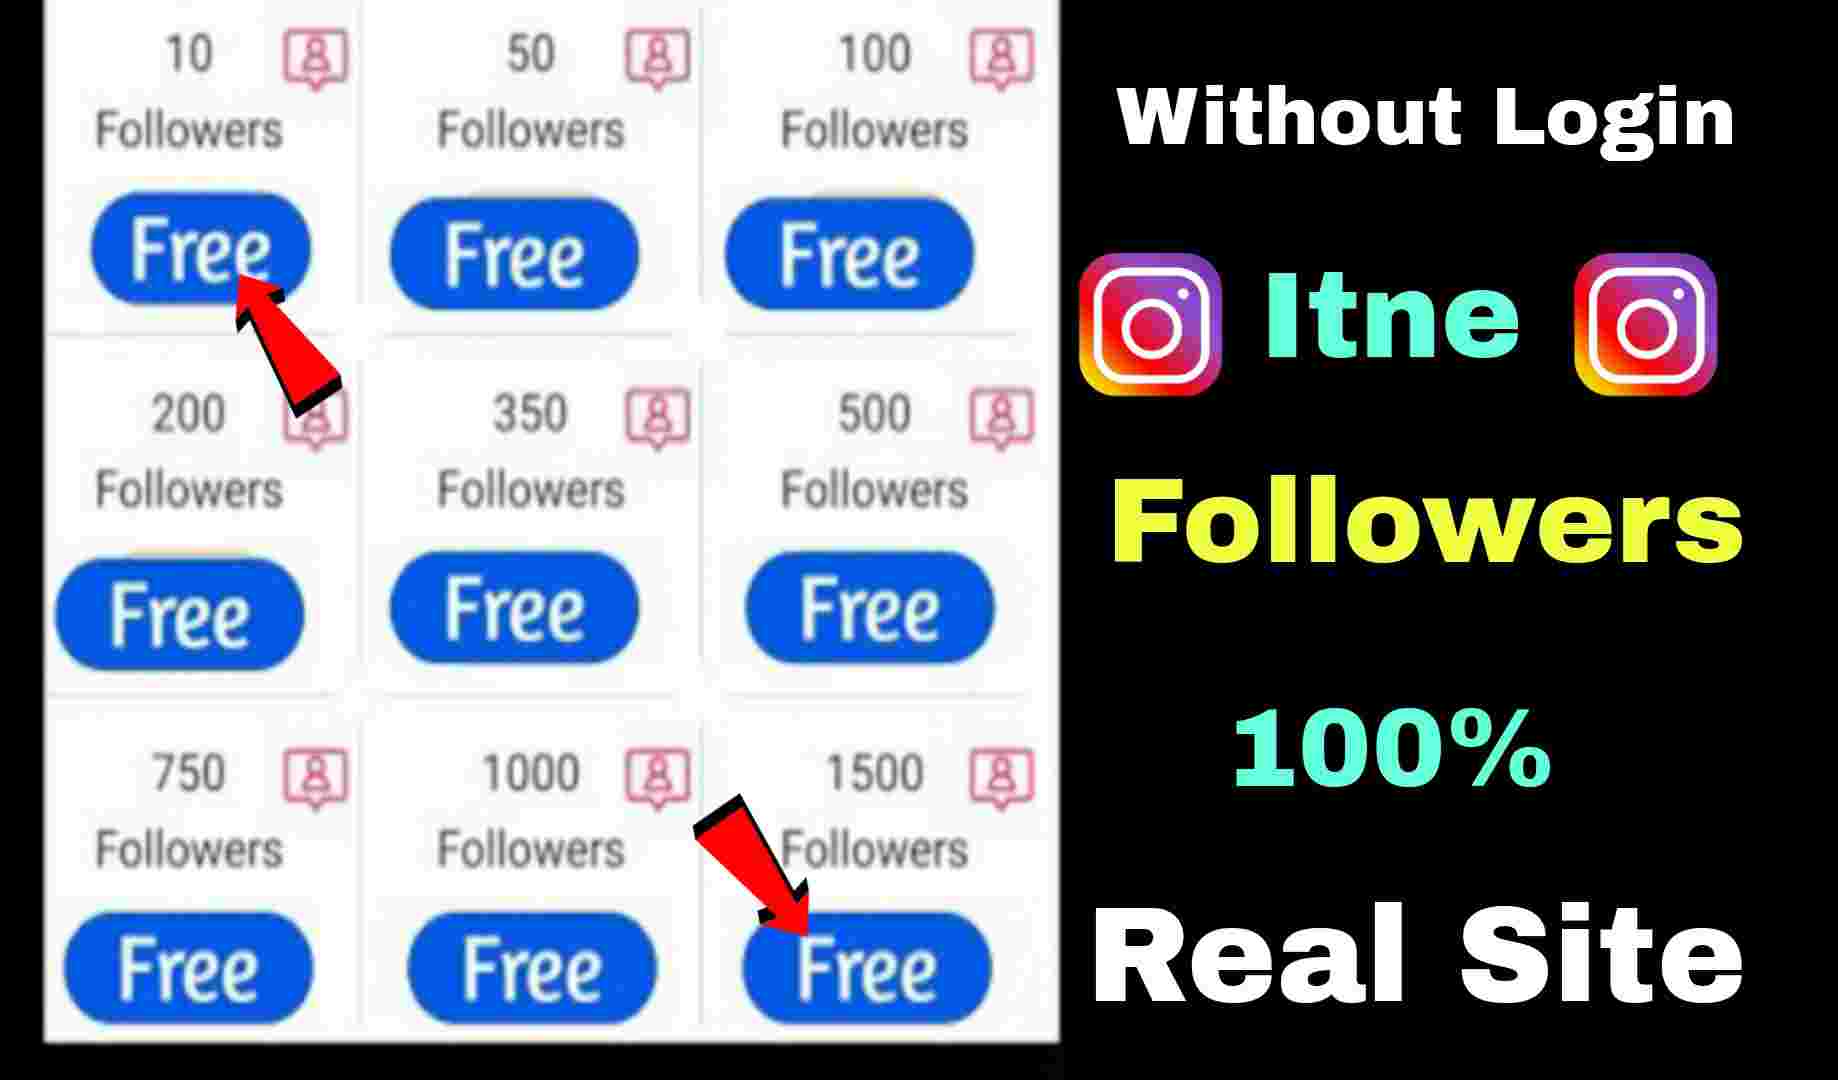 nakrutka Website- Instagram Auto Followers Without Following